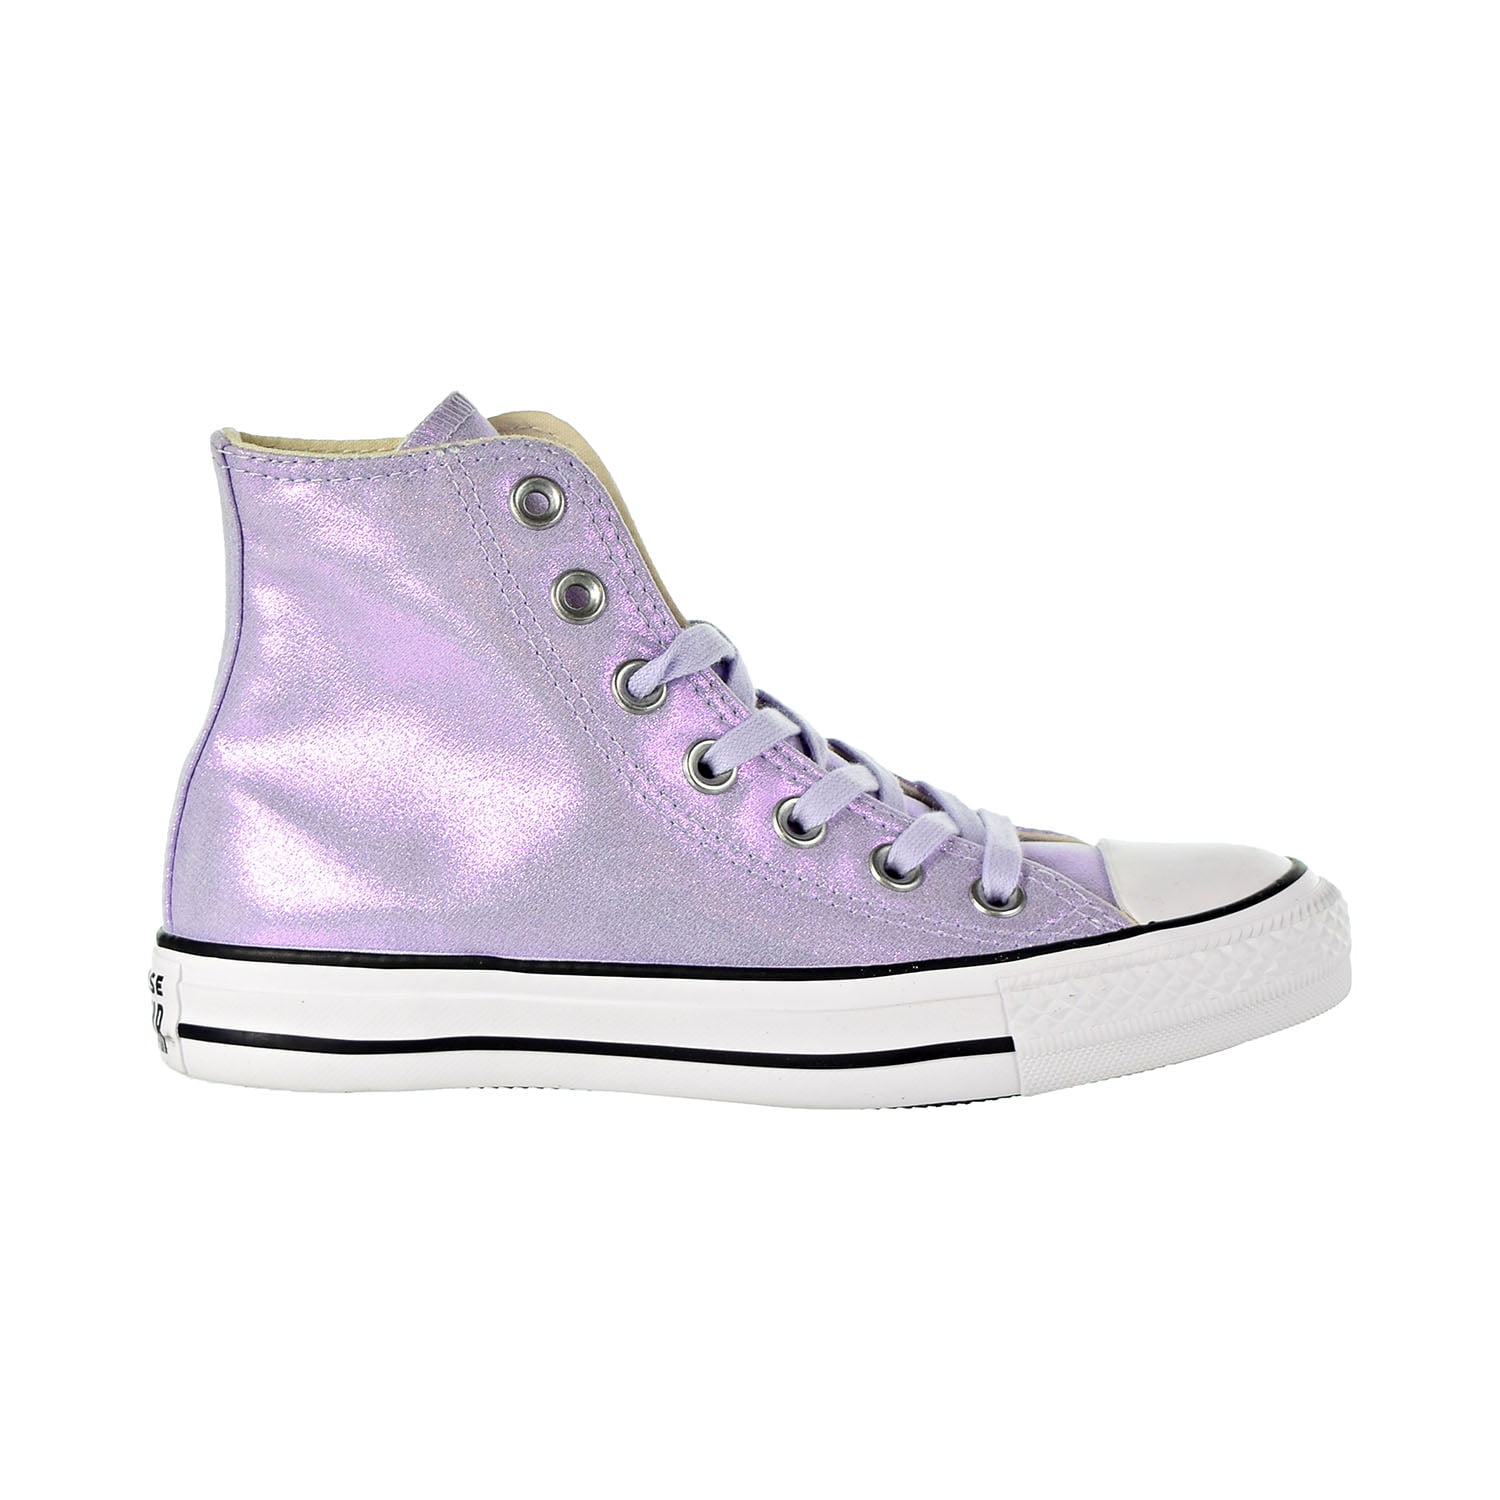 Converse Chuck Taylor Star Hi Women's Shoes Oxygen Purple/Black/White - Walmart.com